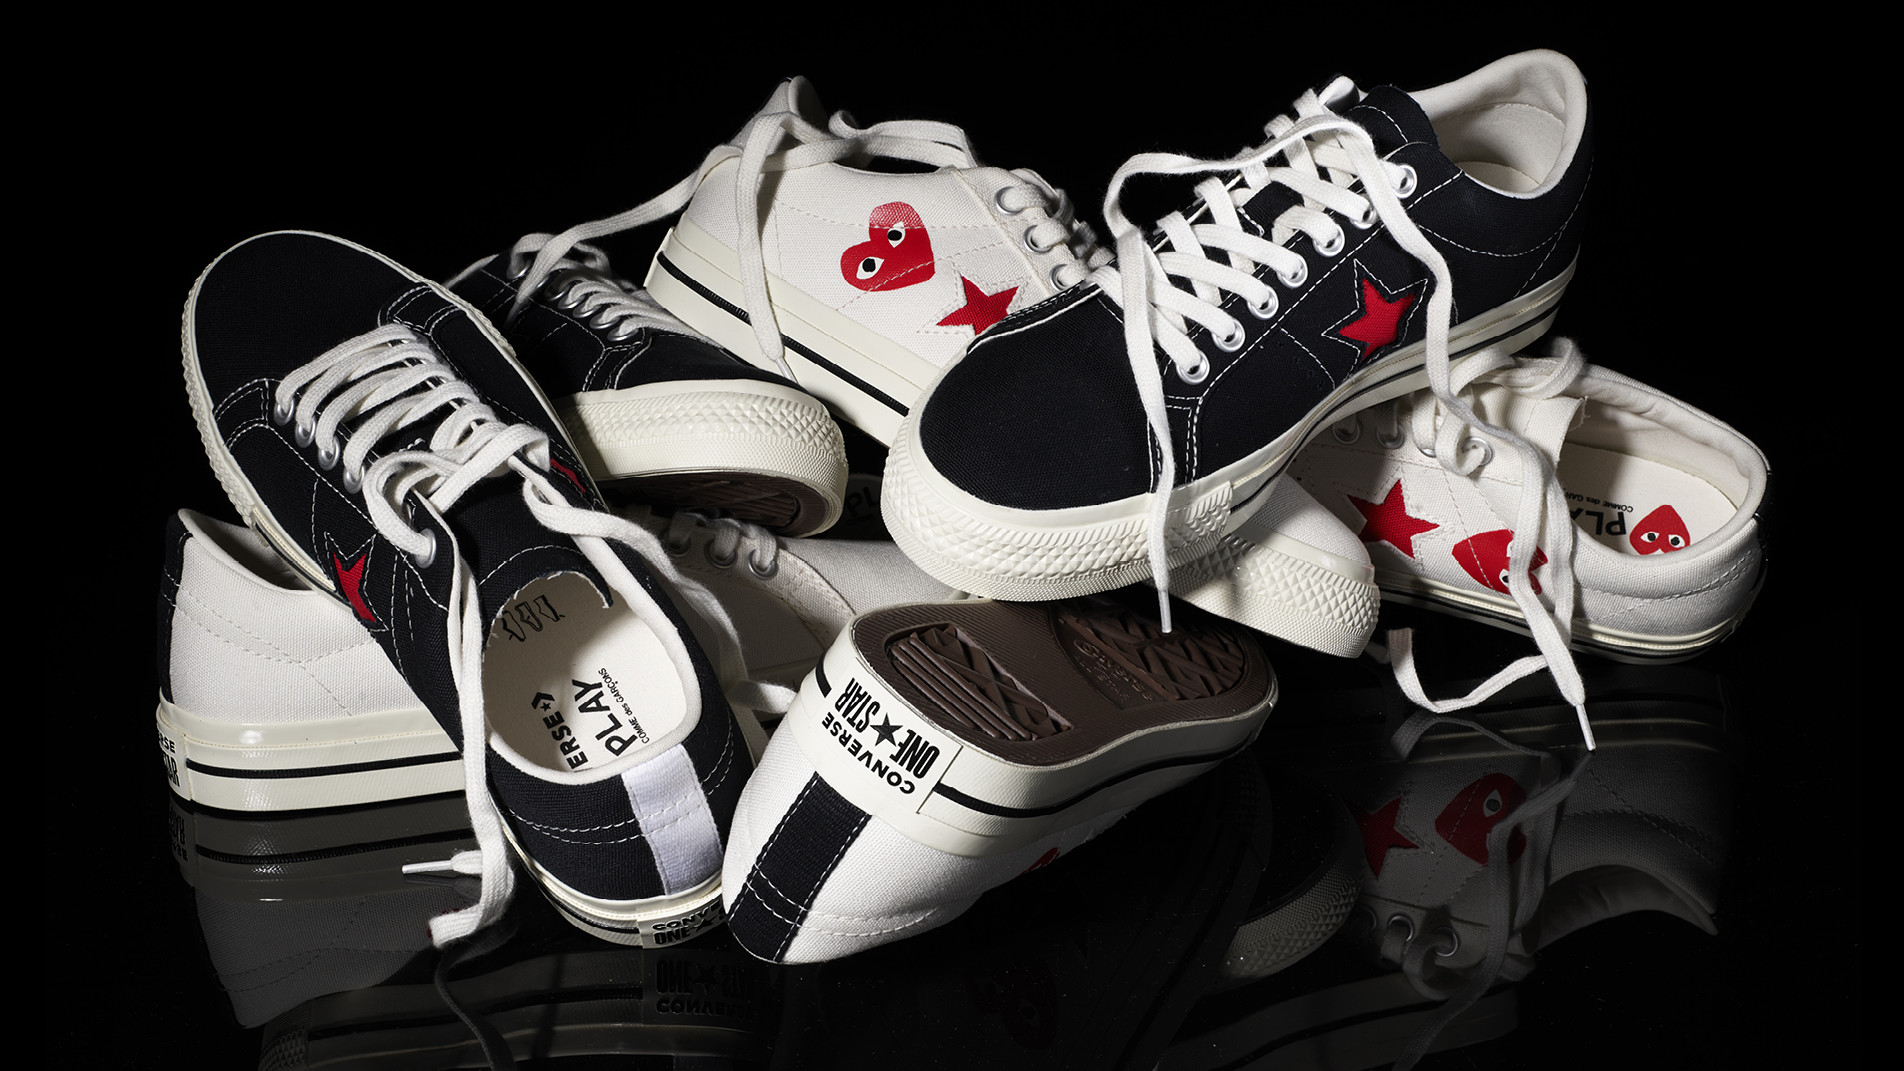 Garçons and Converse Collab on a New Sneaker | Complex